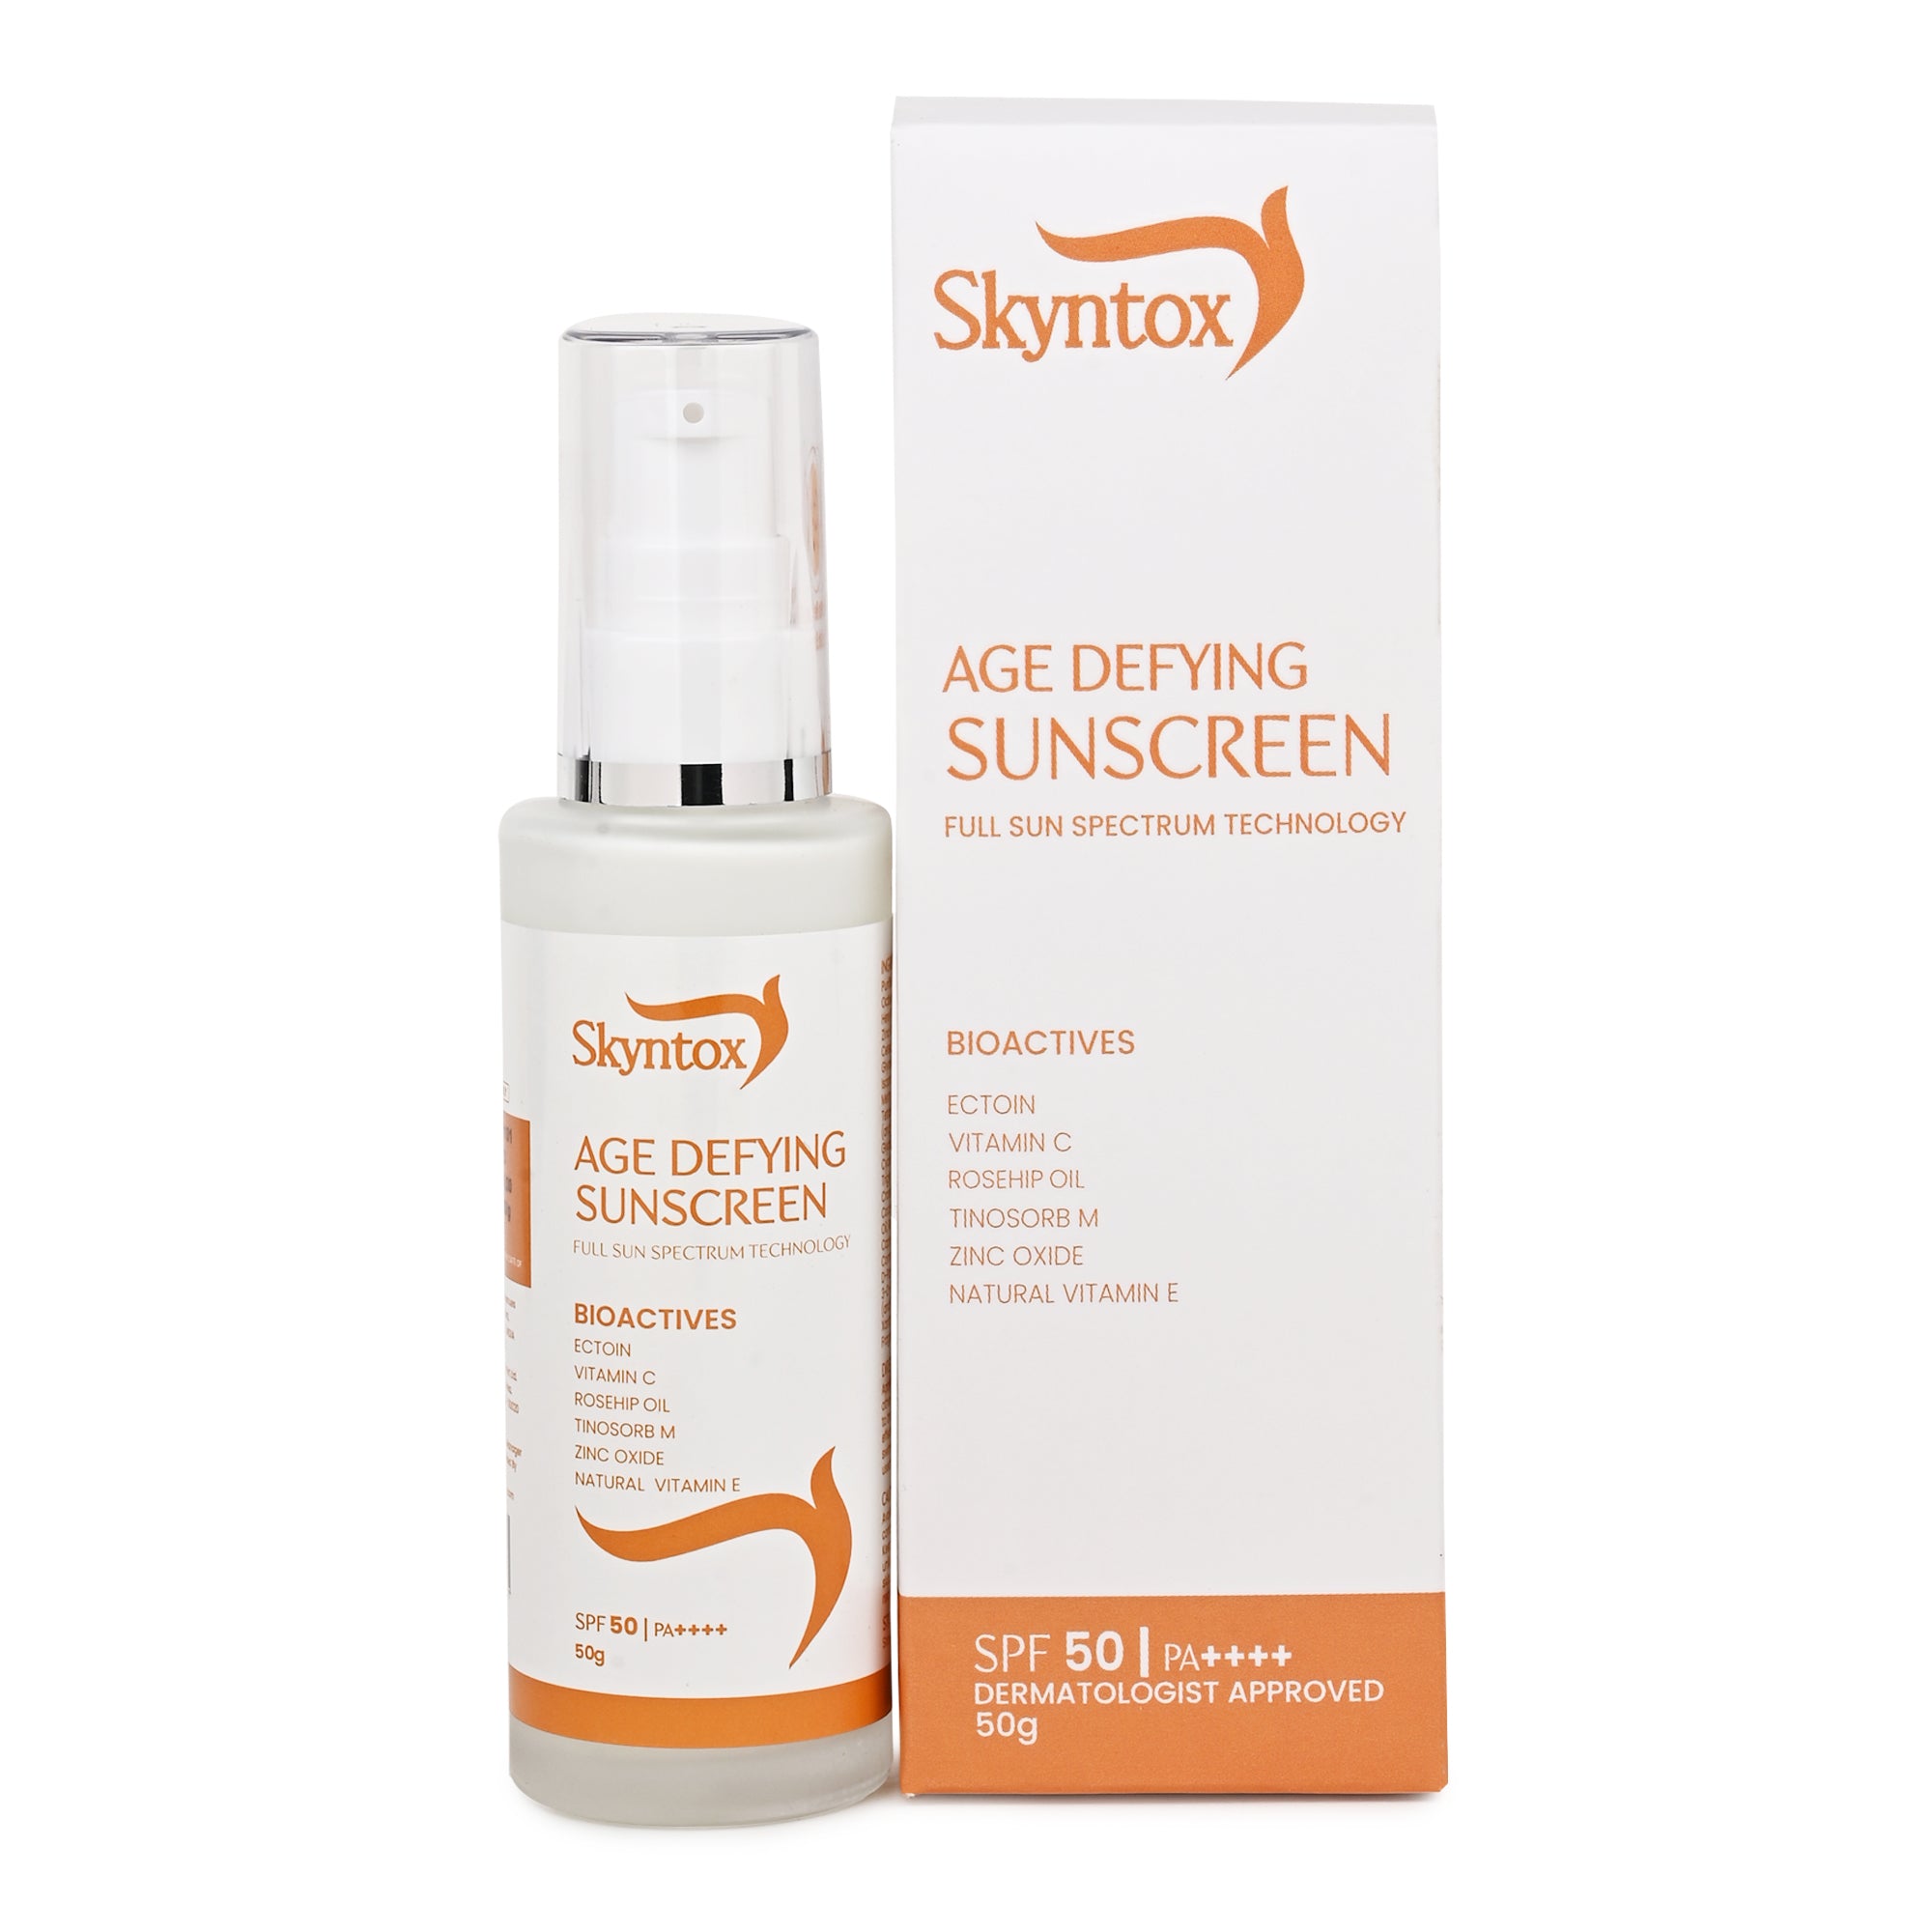 Skyntox Age Defying Sunscreen Cream SPF 50 PA++++